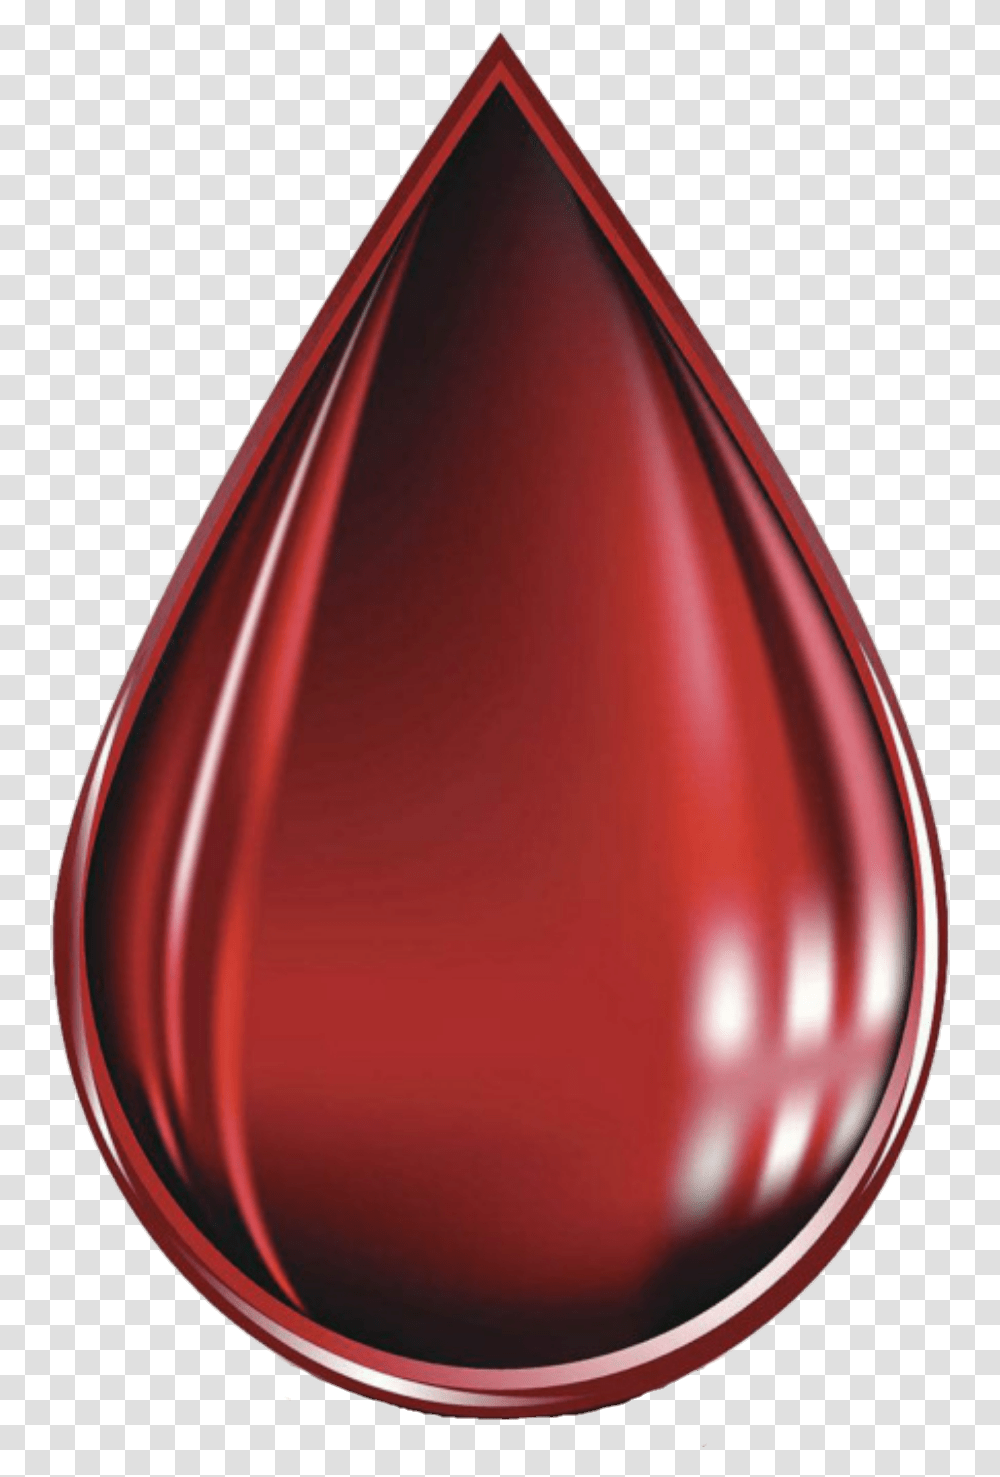 Realistic Blood Drip Egg Decorating, Bottle, Glass, Alcohol, Beverage Transparent Png